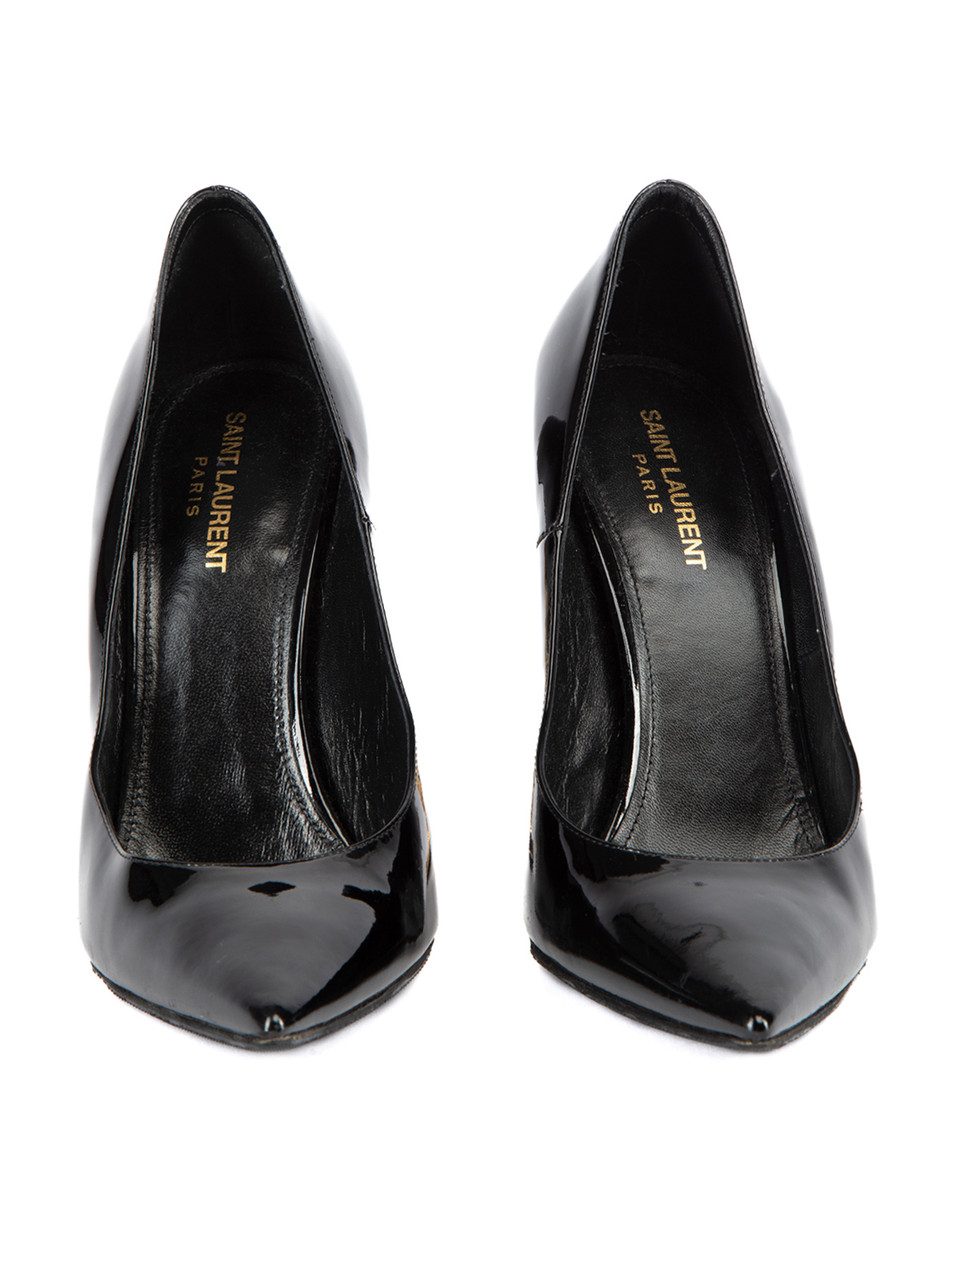 Yves Saint Laurent Black Patent Leather Opyum Pump Heels